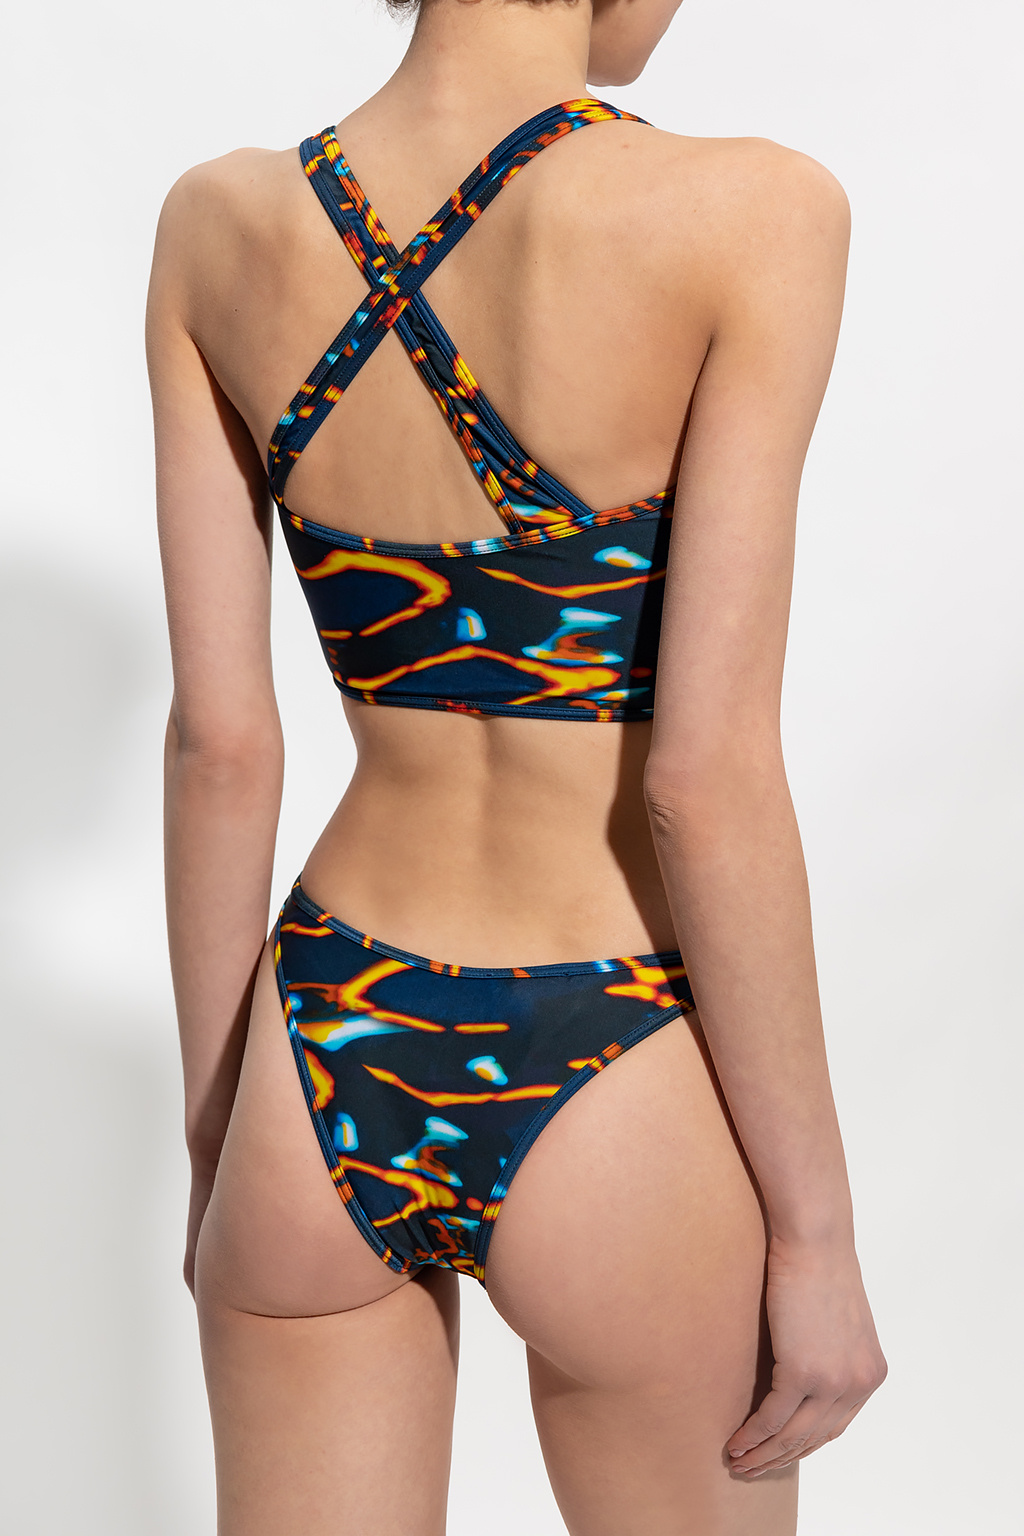 The Attico Two-piece swimsuit